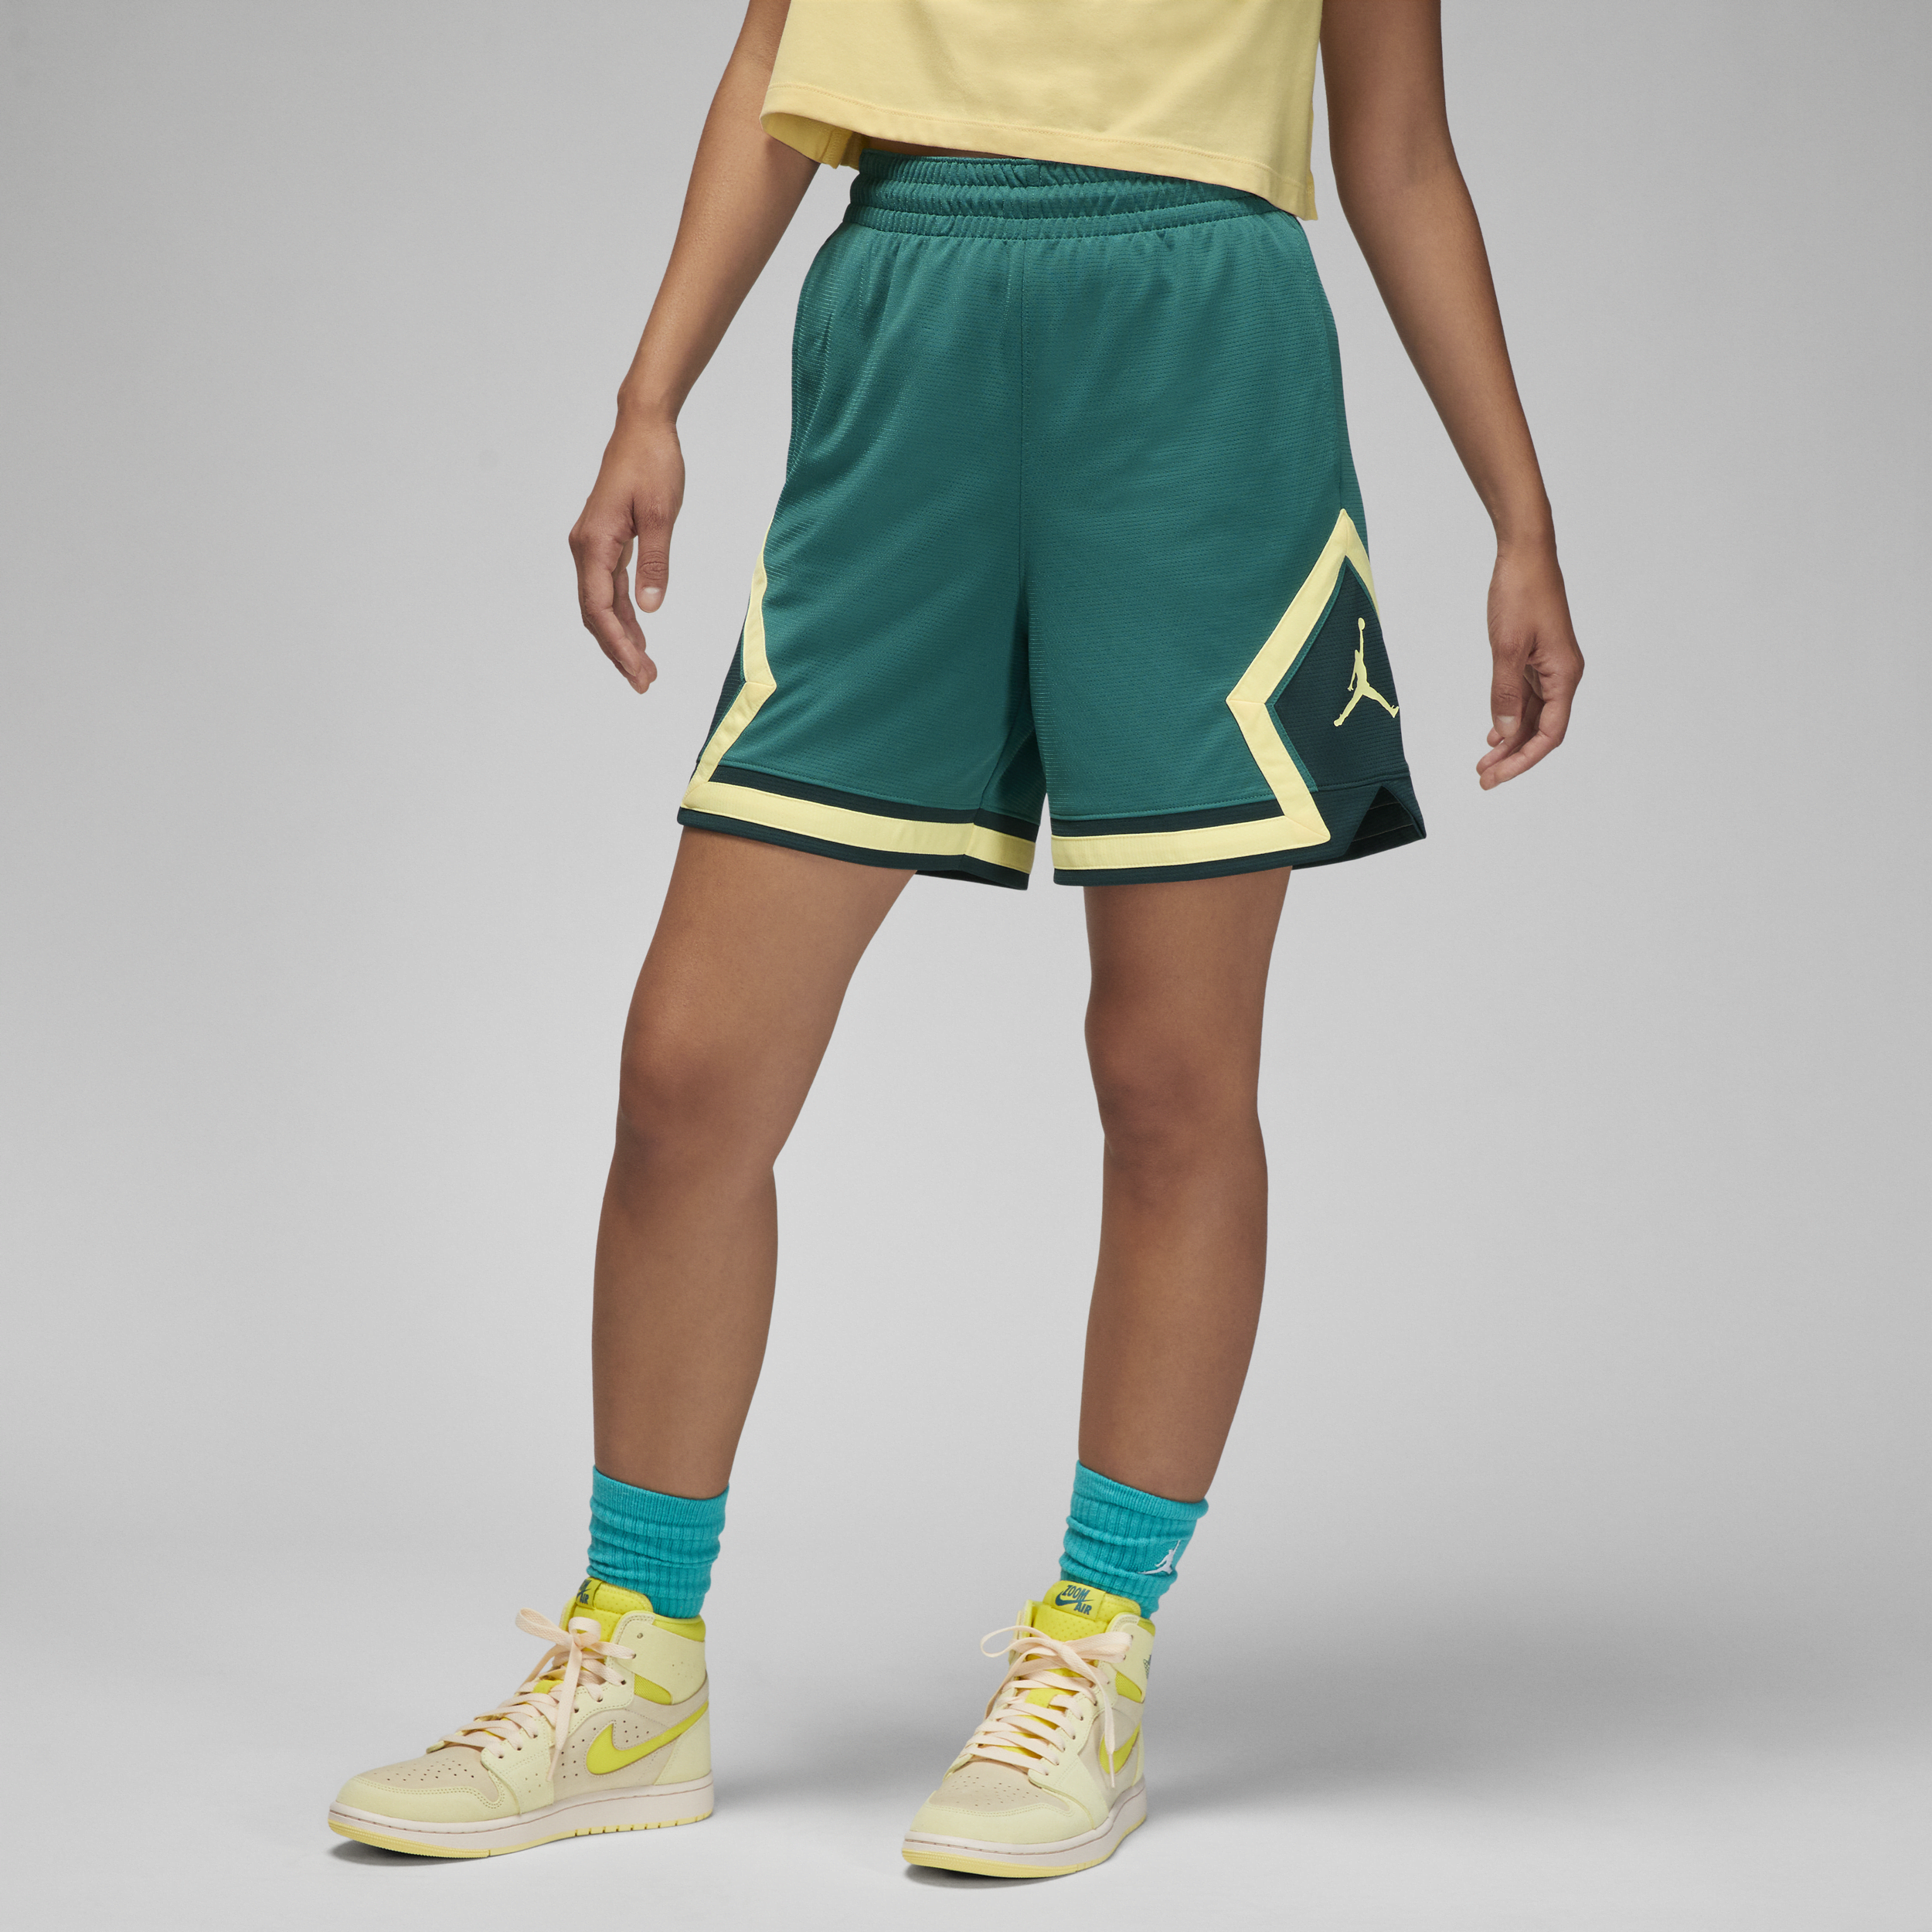 Jordan Sport Diamond-shorts til kvinder - grøn